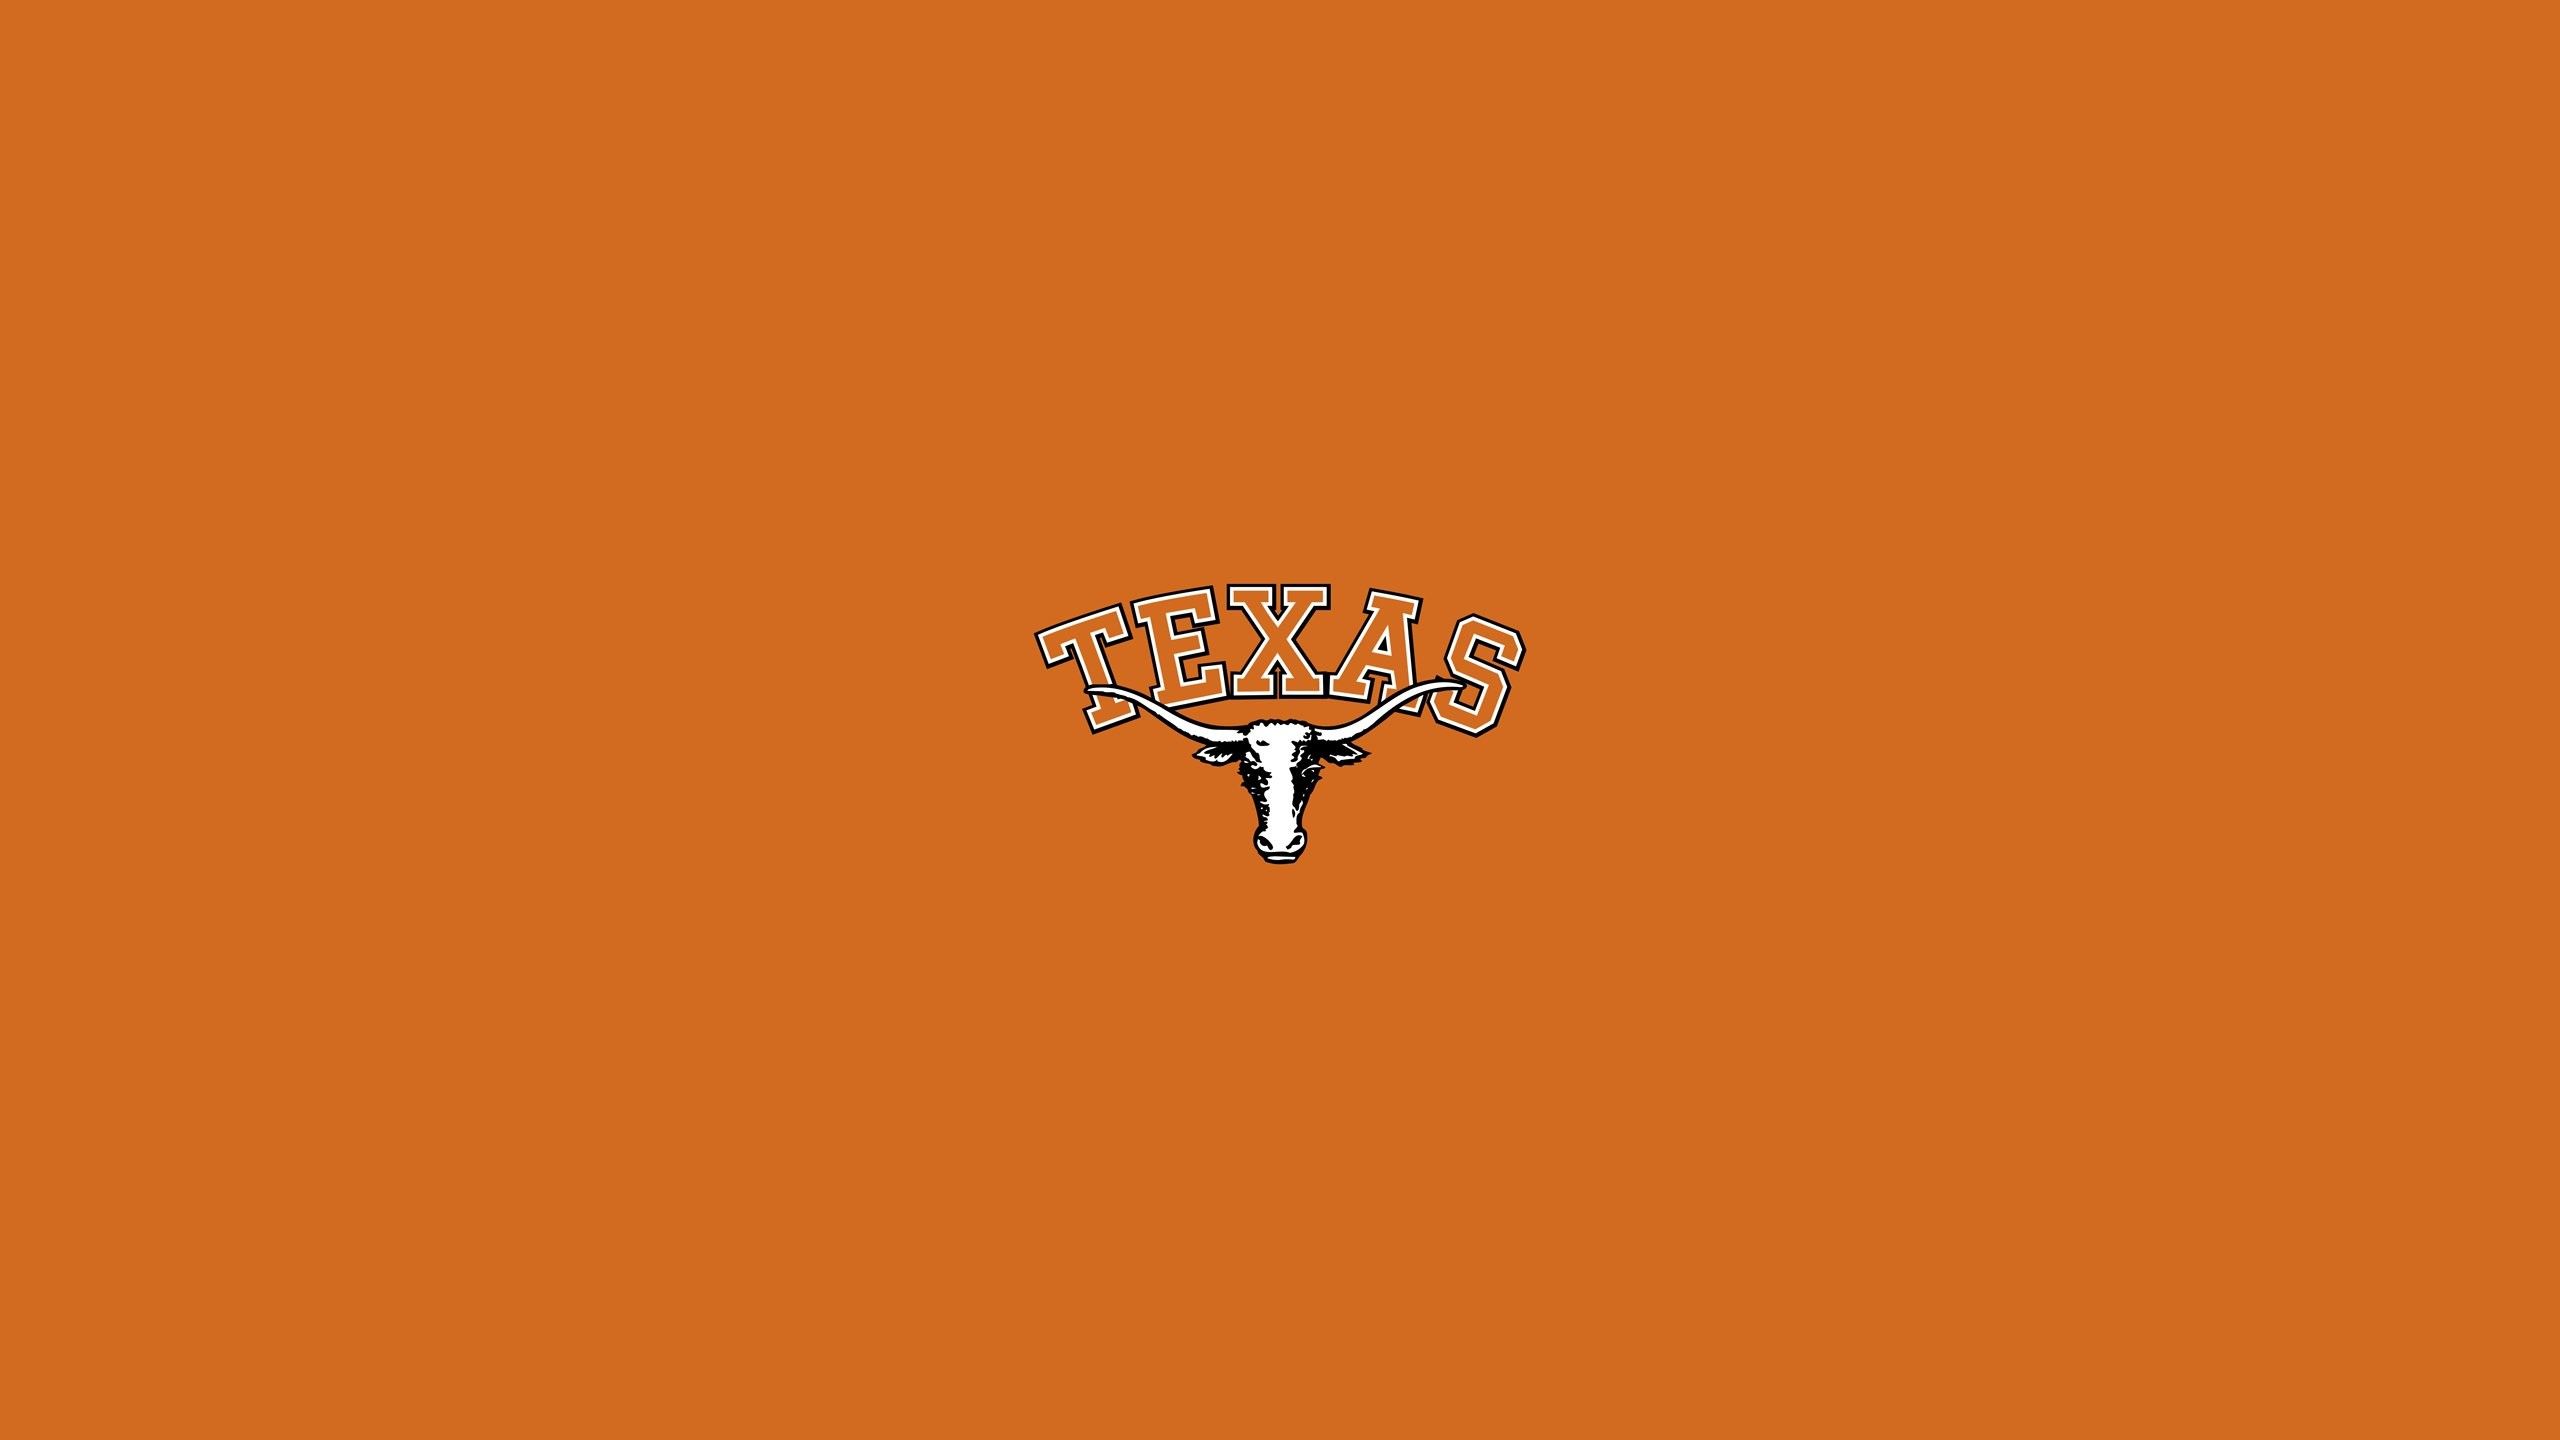 The dallas mavericks logo on an orange background - Texas